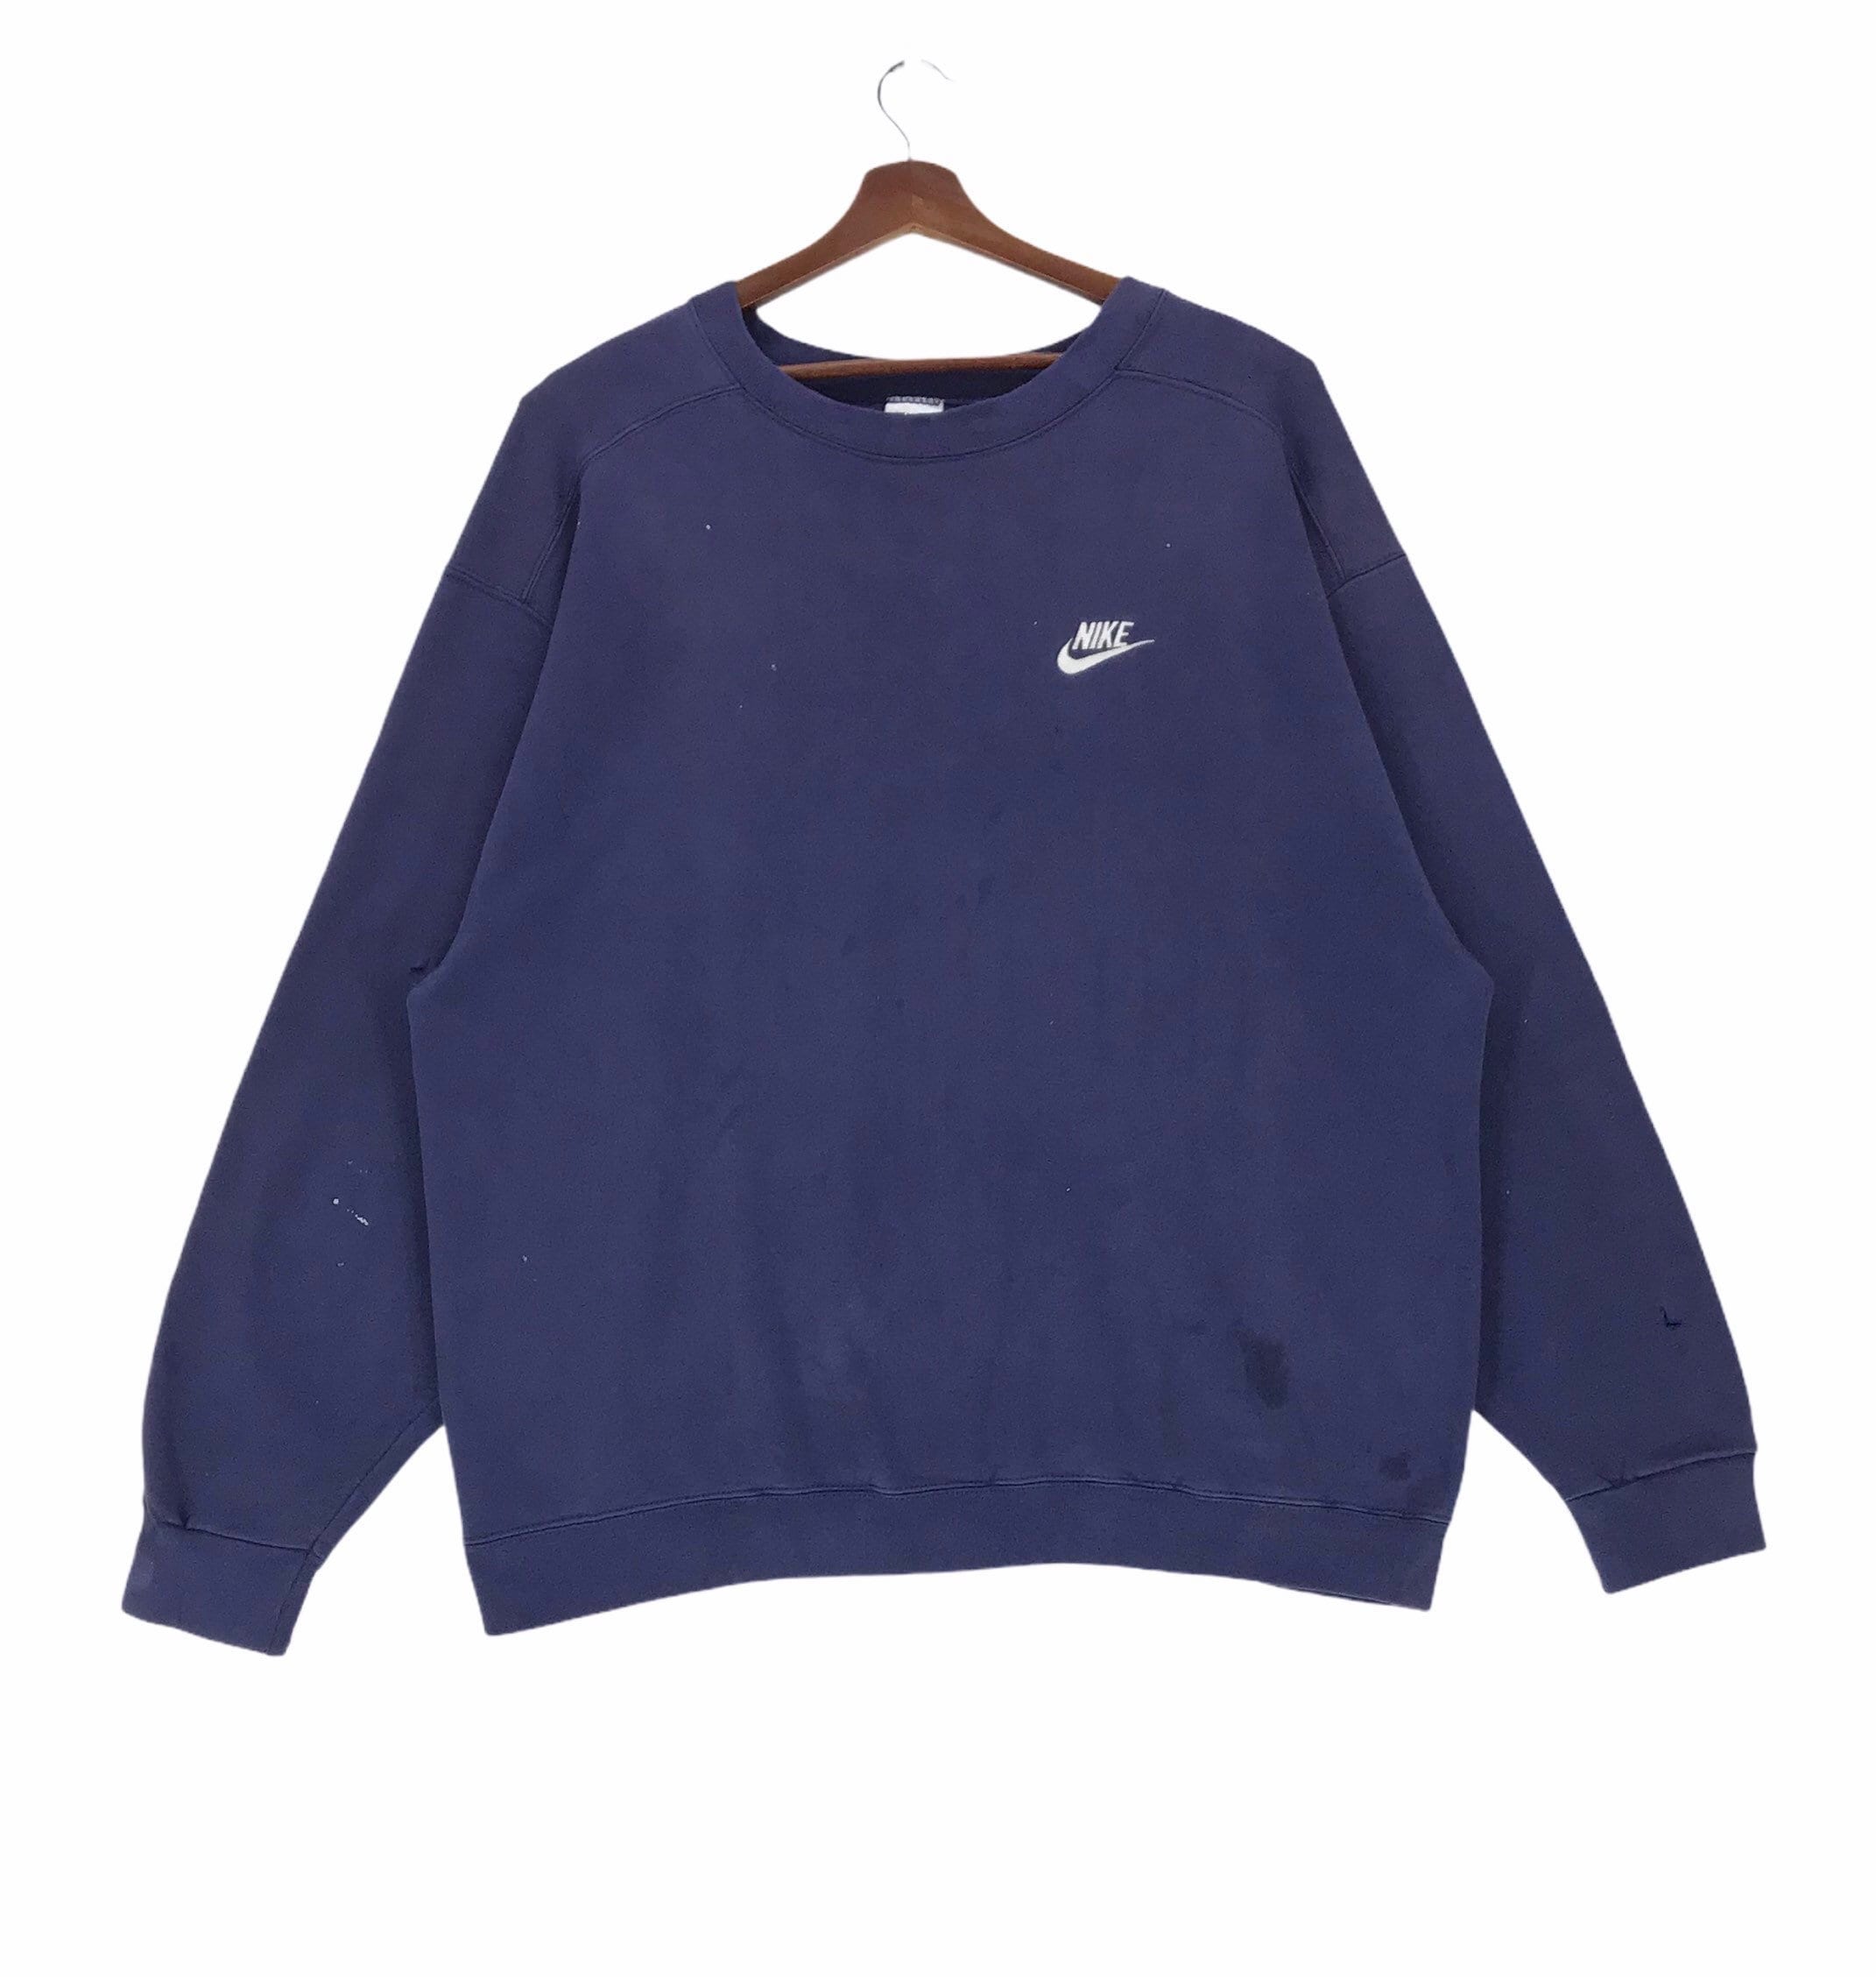 Vintage 90s Nike Sweatshirt Crewneck Spellout Nike Streetwear Blue ...